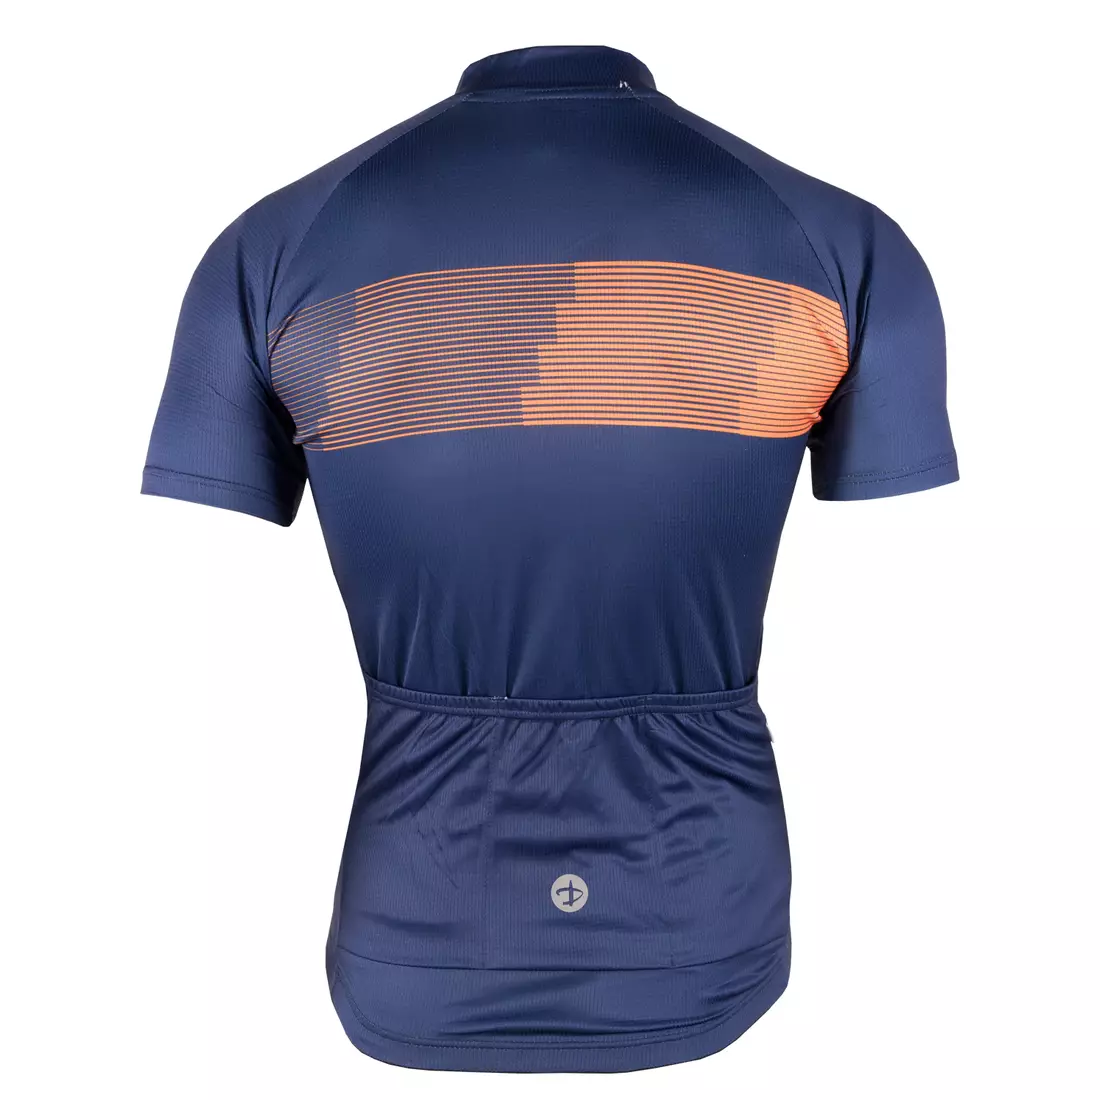 [Set] DEKO STYLE-0421 pánský cyklistický dres s krátkým rukávem, námořnická modrá + DEKO POCKET pánské cyklistické kraťasy, černá